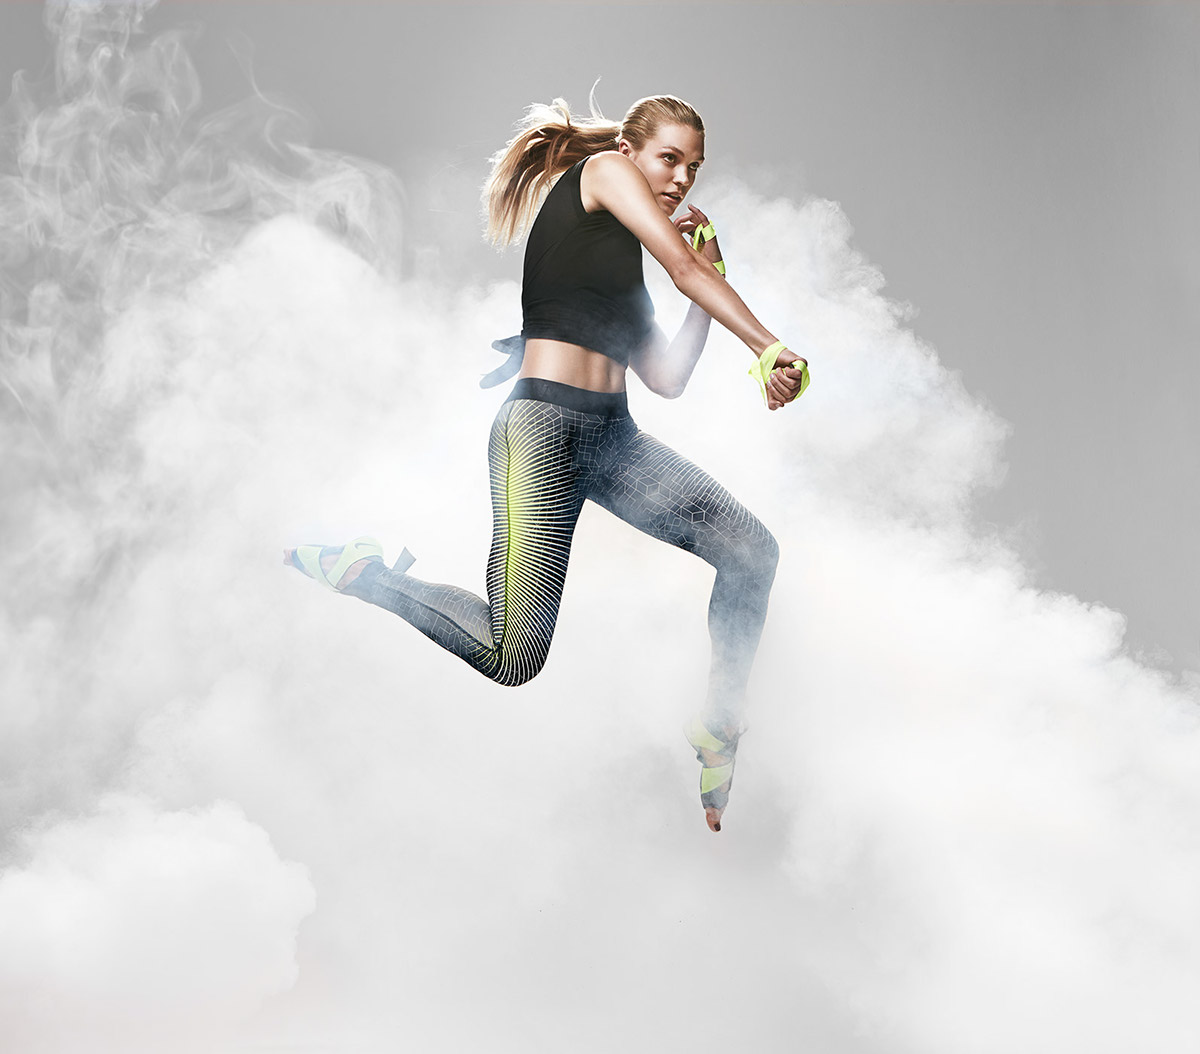 matt hawthorne Nike adidas smoke clouds fitness workout nike women FIT Matt Hawthorne Photography Crossfit athletic jump leap